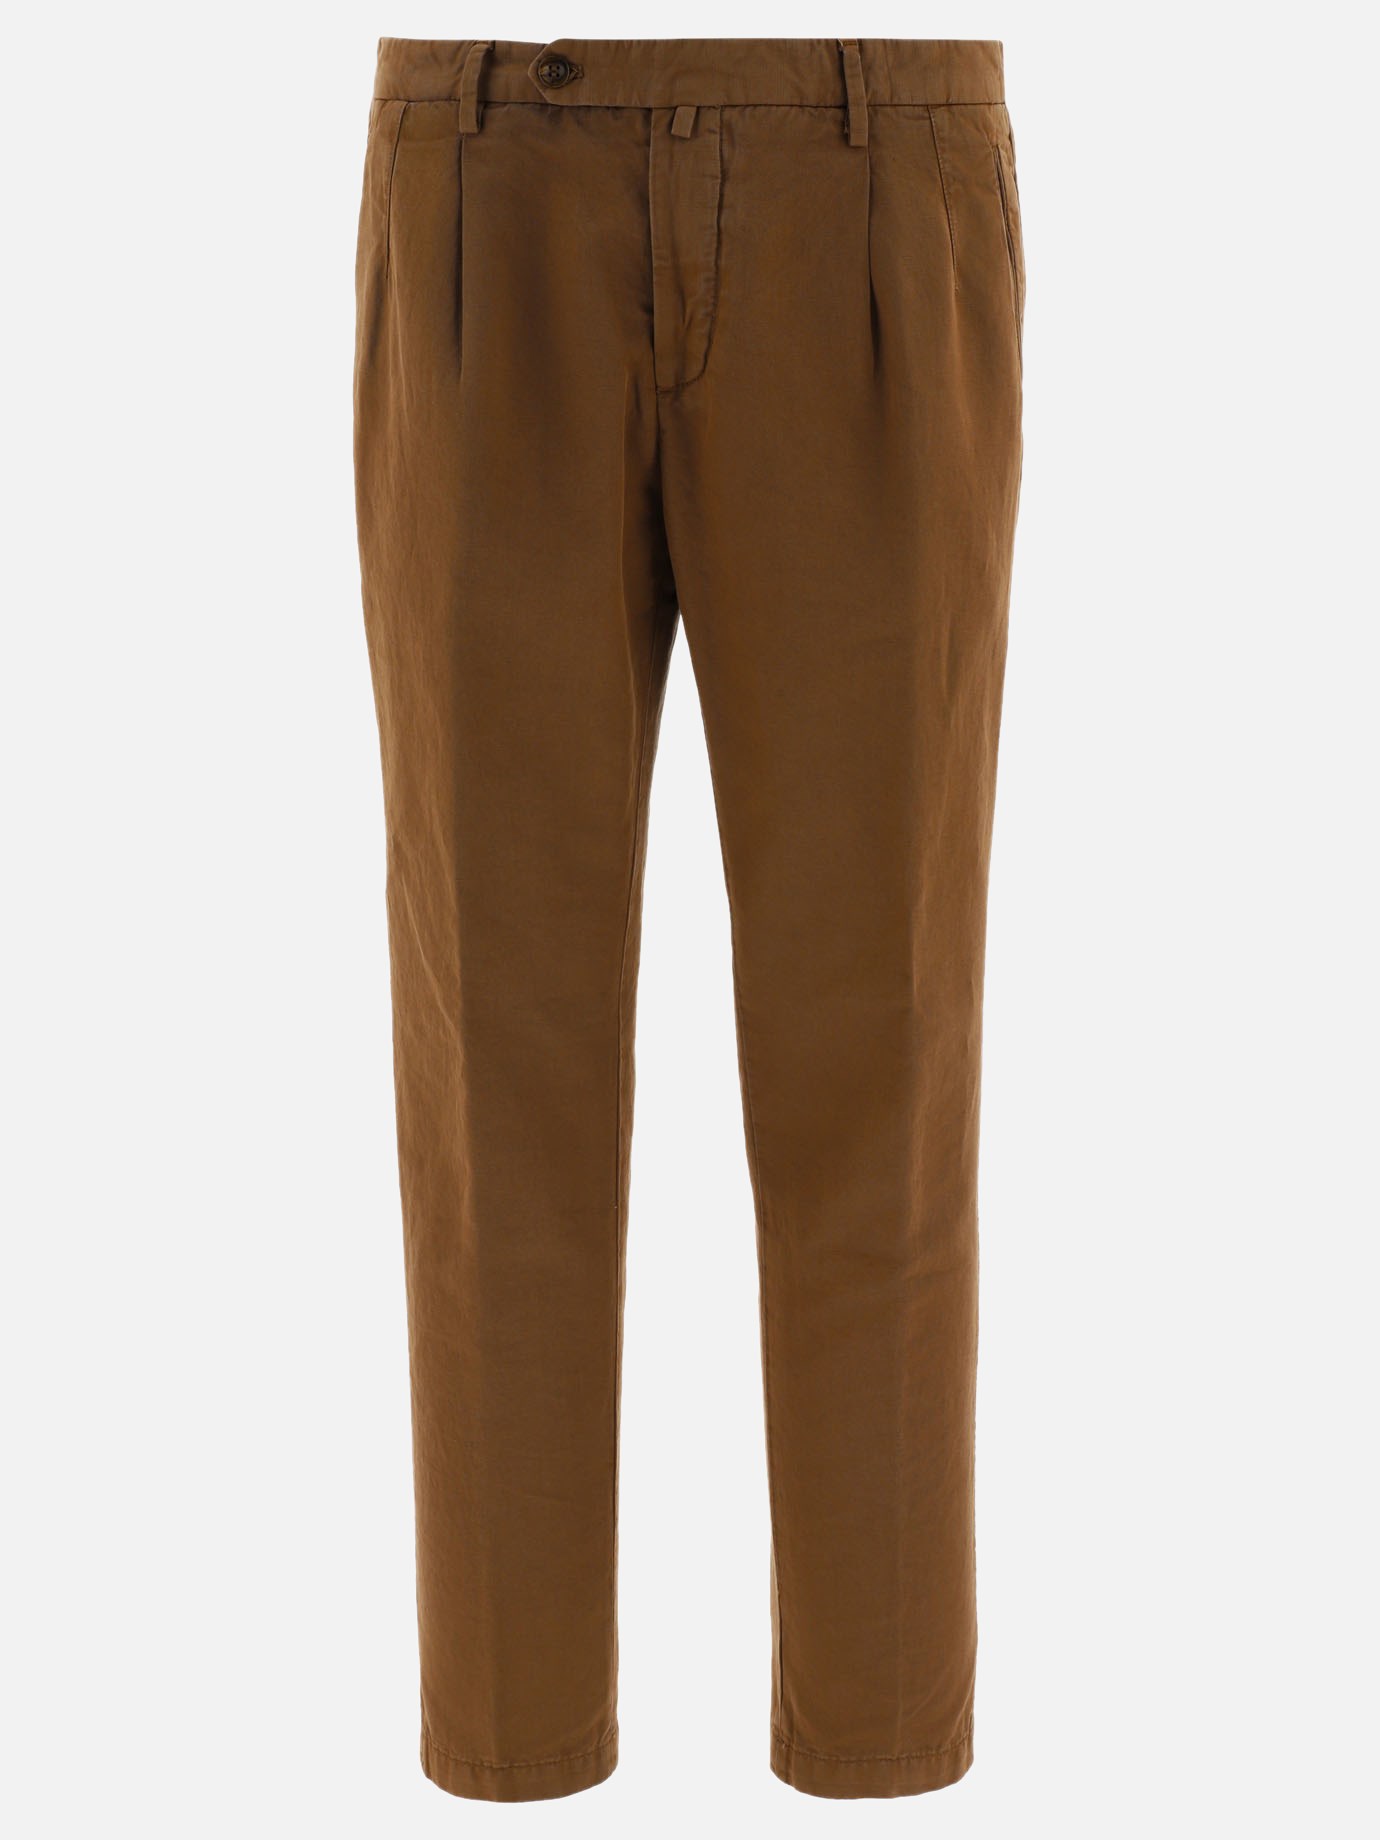 Pantaloni  Cernobbio by Briglia 1949 - 3